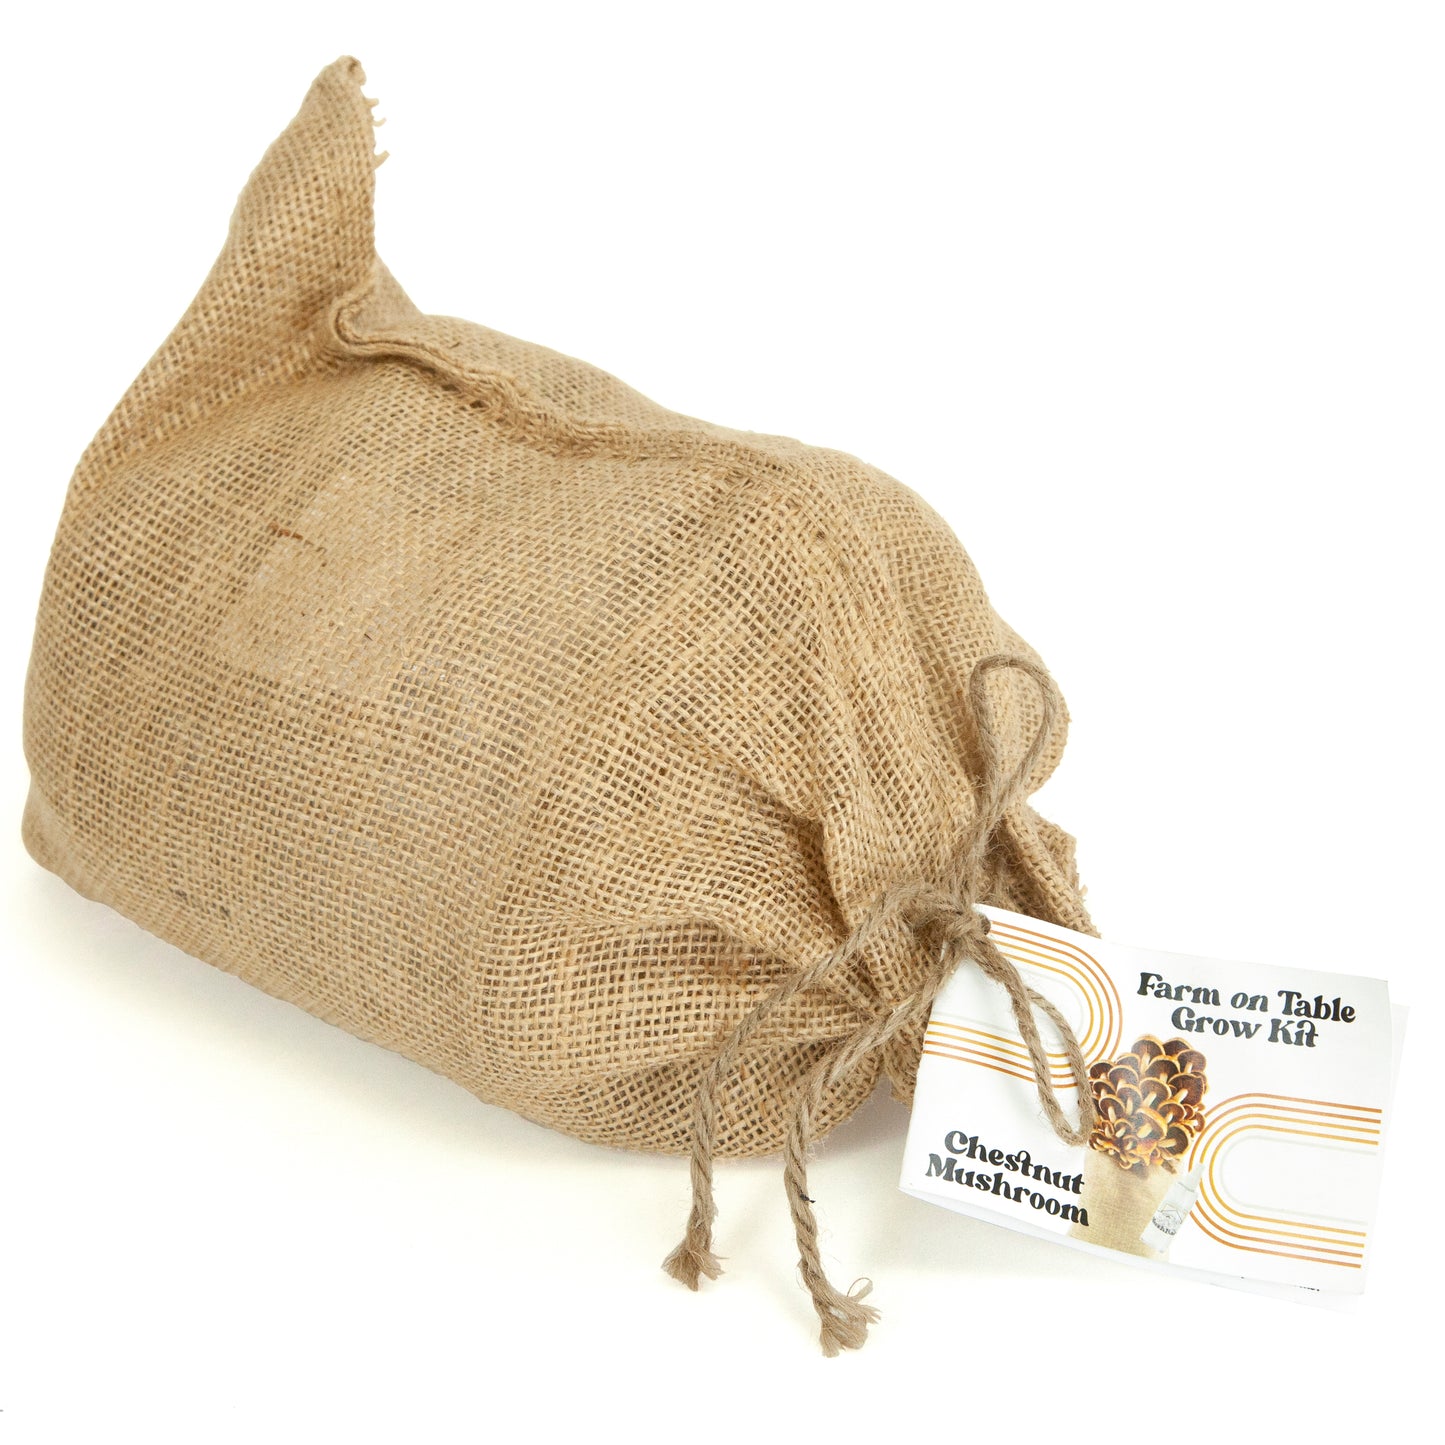 Mushbarn Chestnut Mushroom Farm on Table Grow Kit burlap sack with tag on white background.